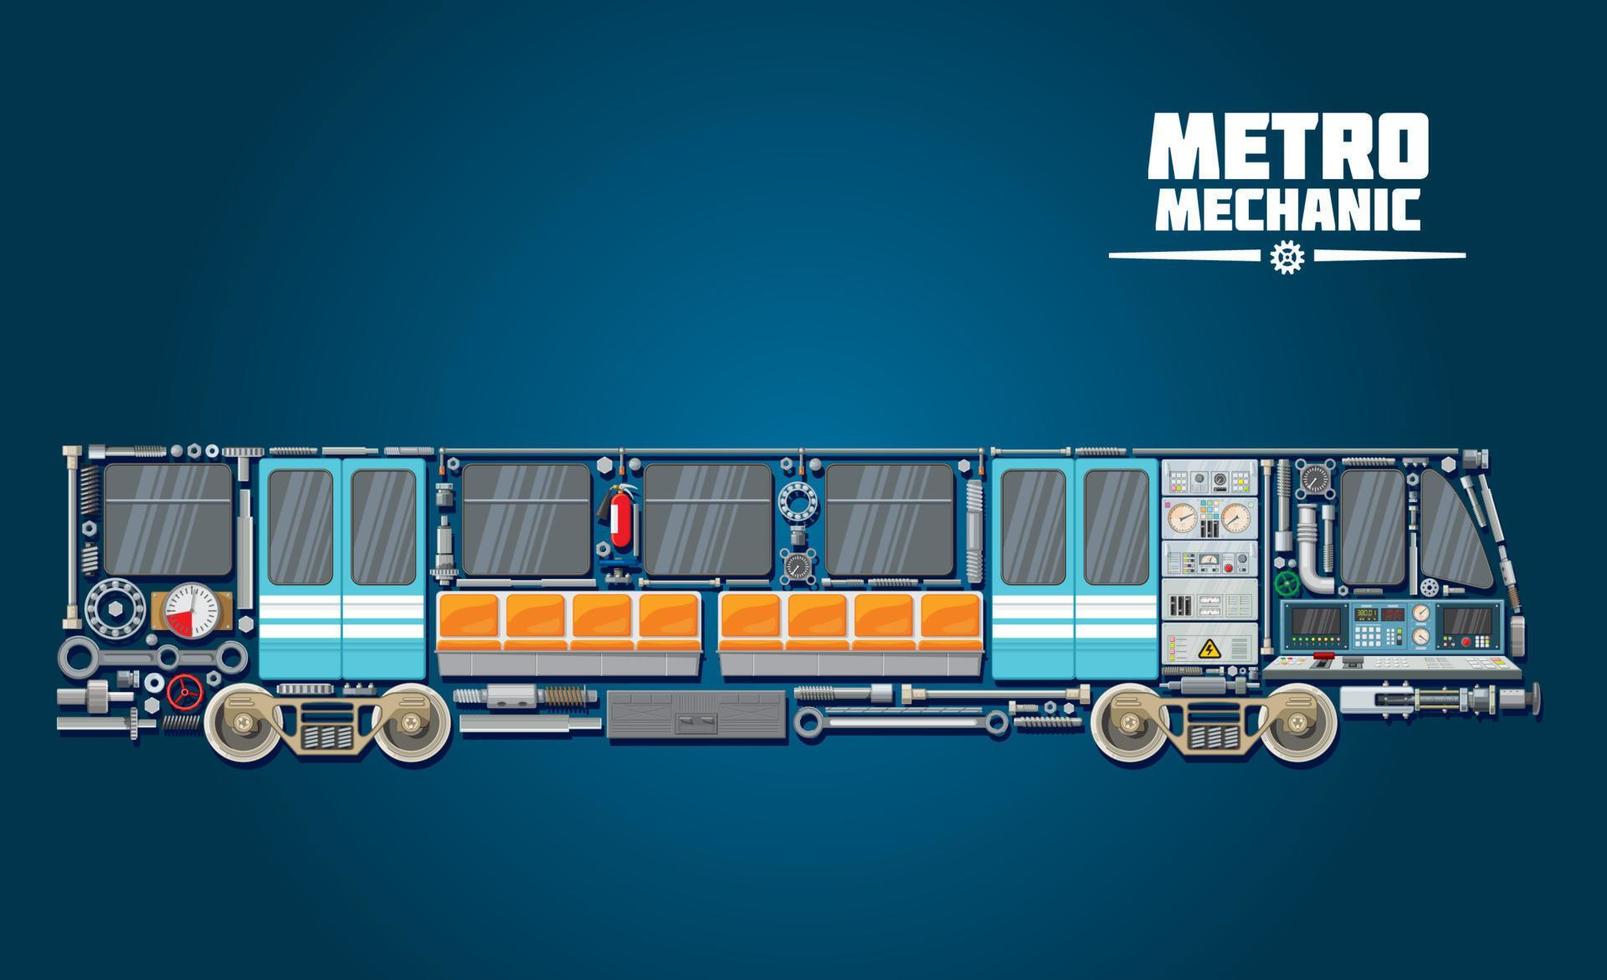 Subway train parts icon for metro mechanic concept vector